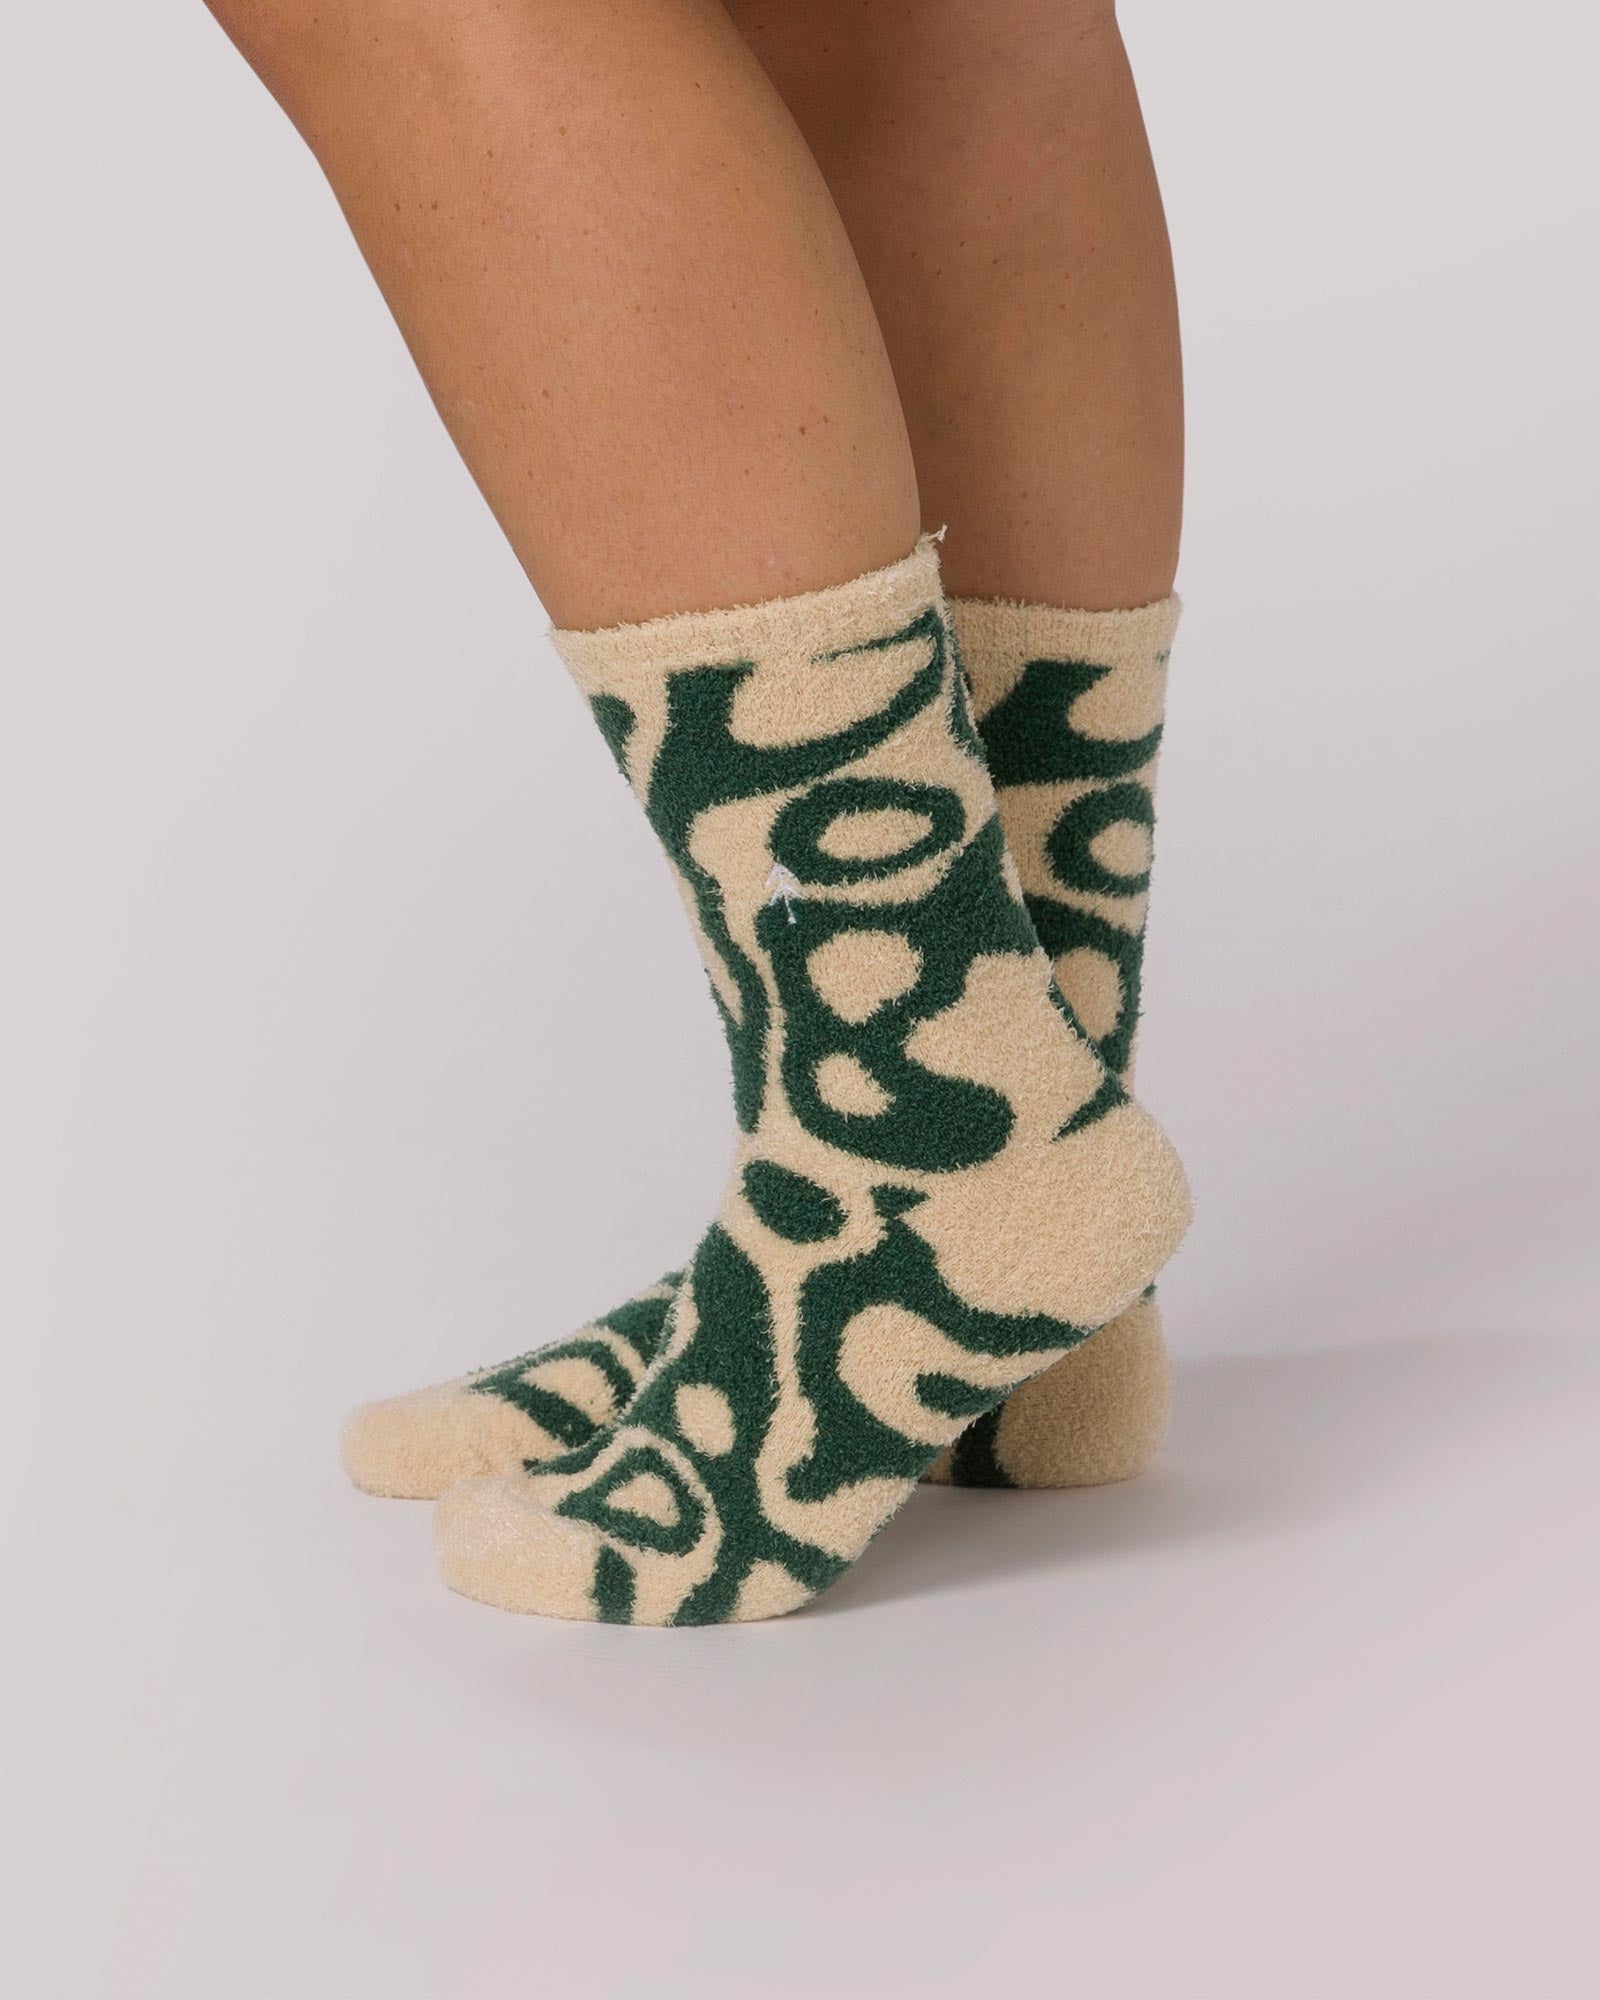  Funny Socks For Men & Women - Classics & Grippy Socks - Fun  Socks